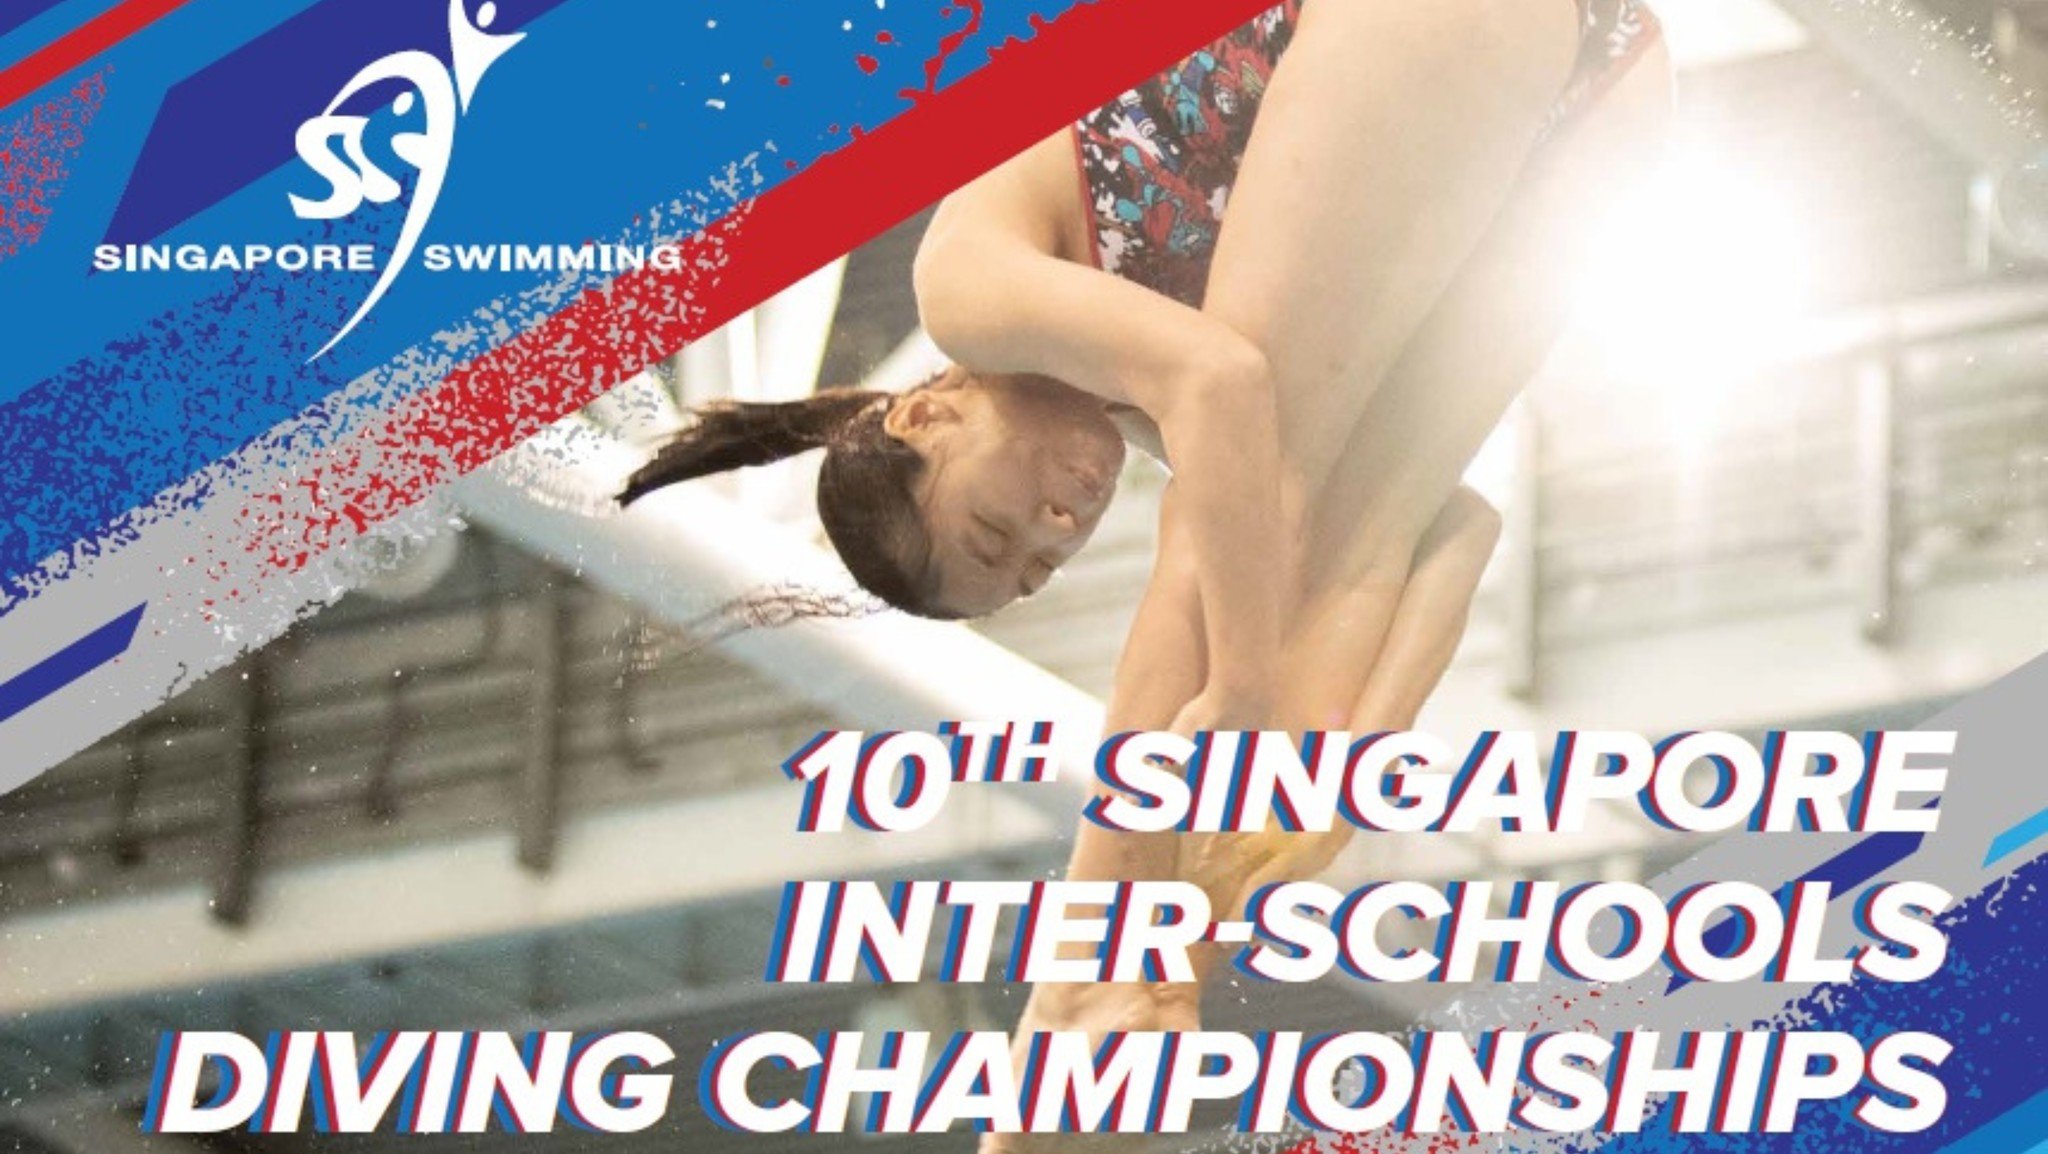 Singapore Swimming Association